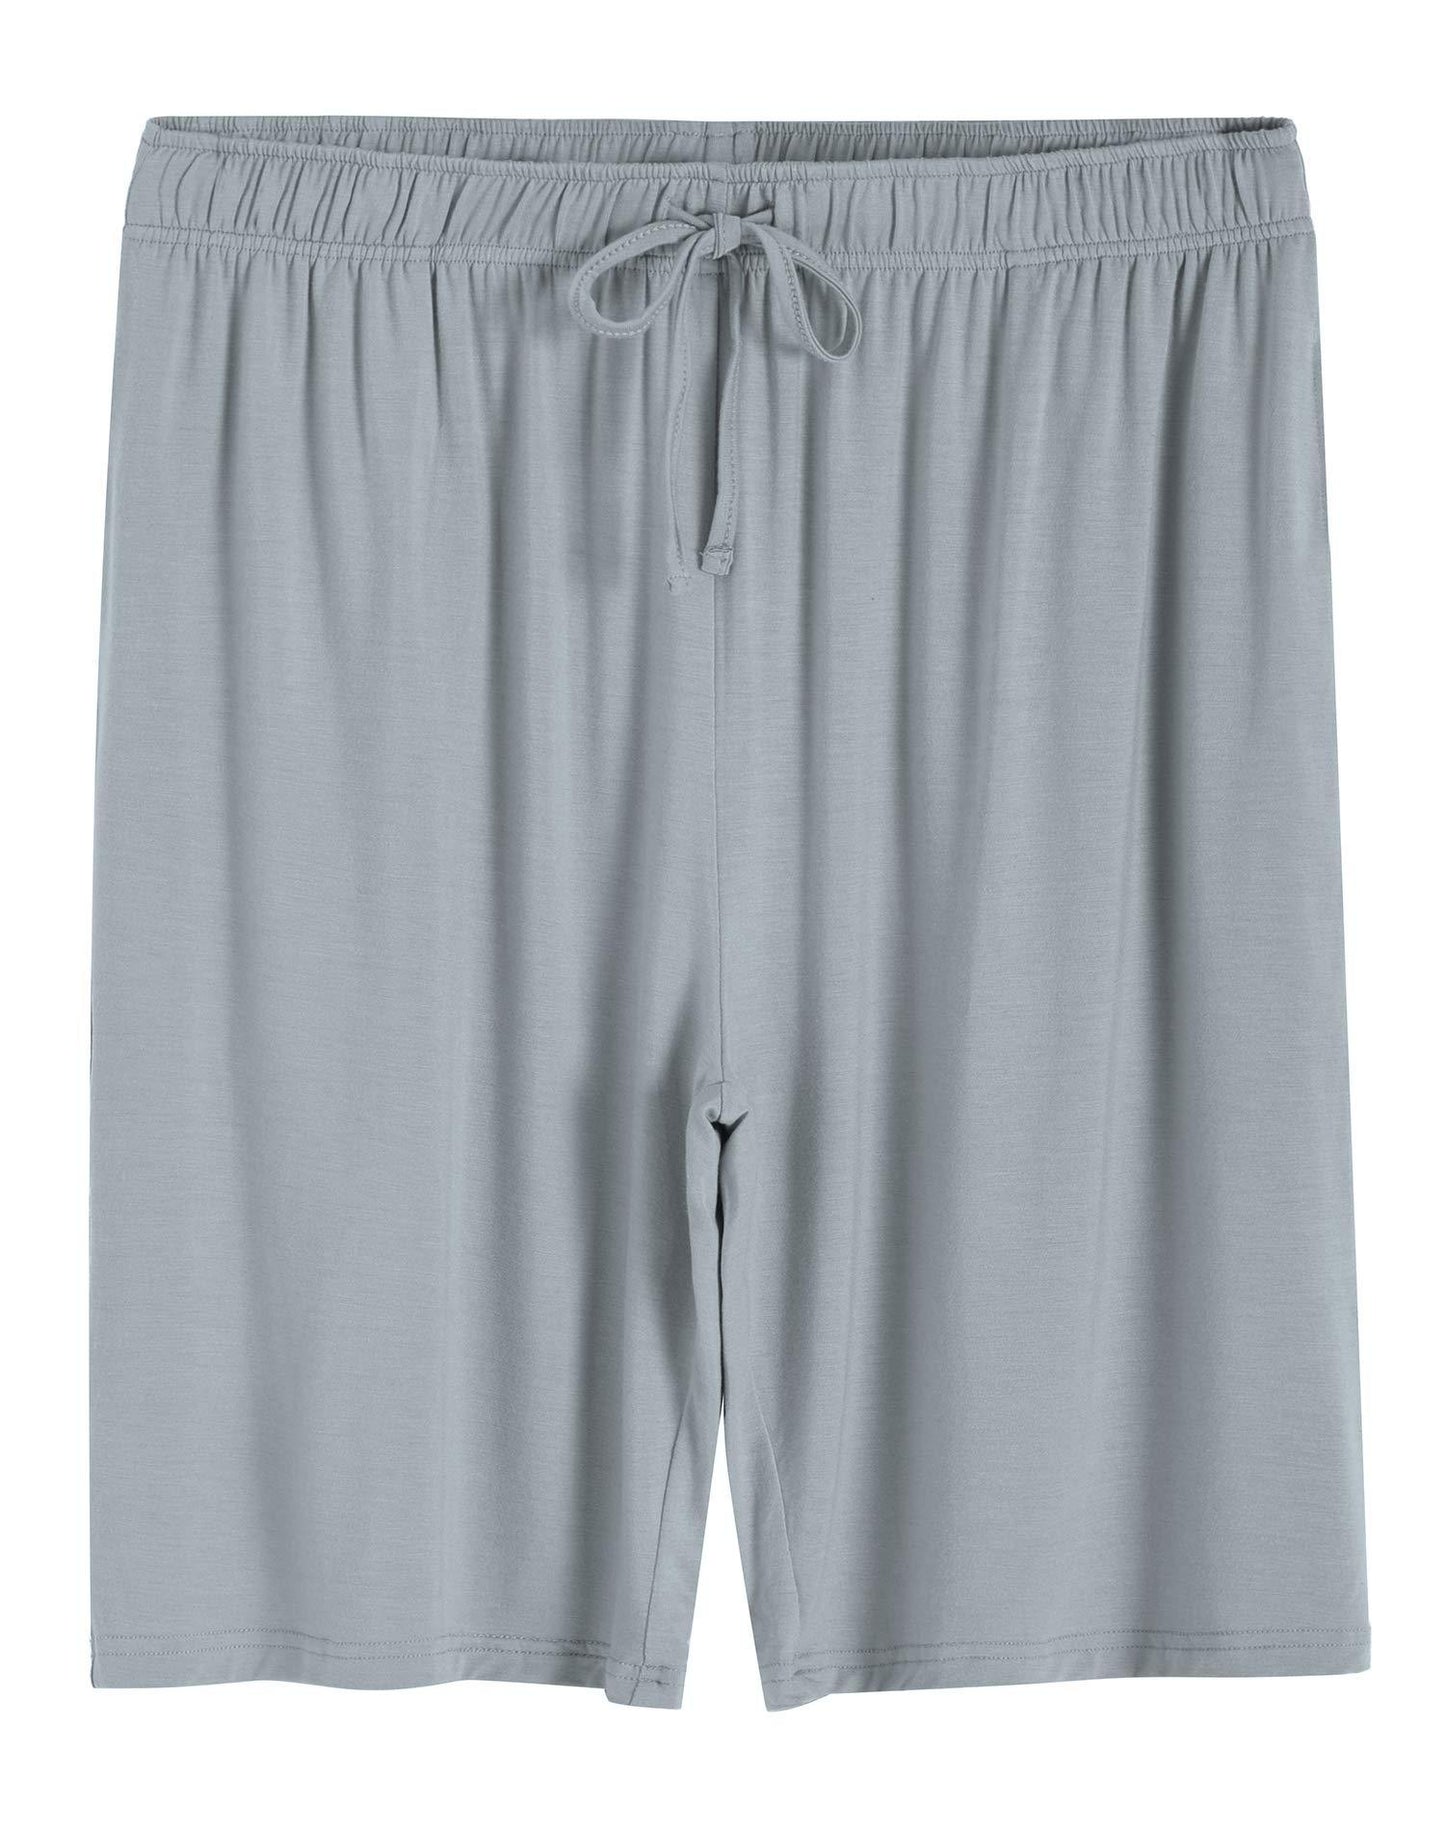 Men's Pajama Bottom Shorts - Latuza